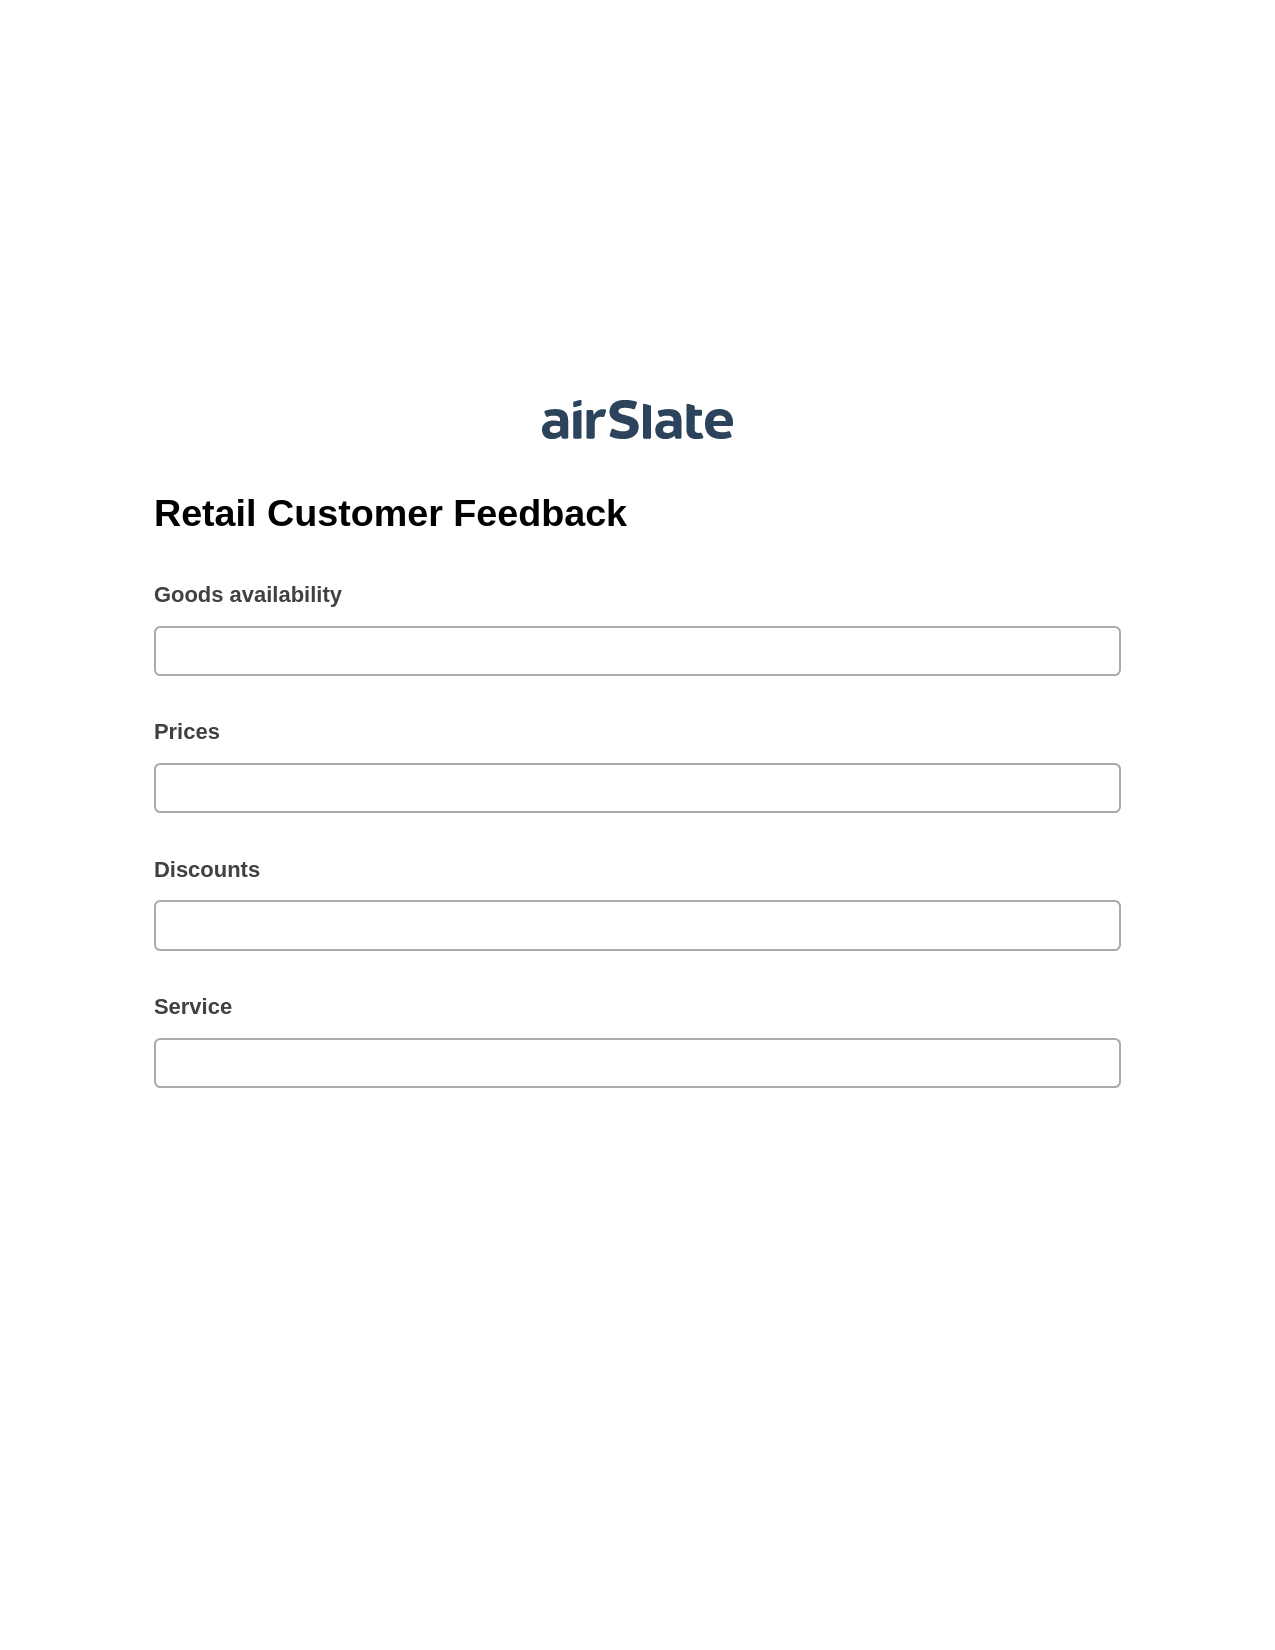 Multirole Retail Customer Feedback Pre-fill from Salesforce Record Bot, Email Notification Bot, Slack Notification Postfinish Bot